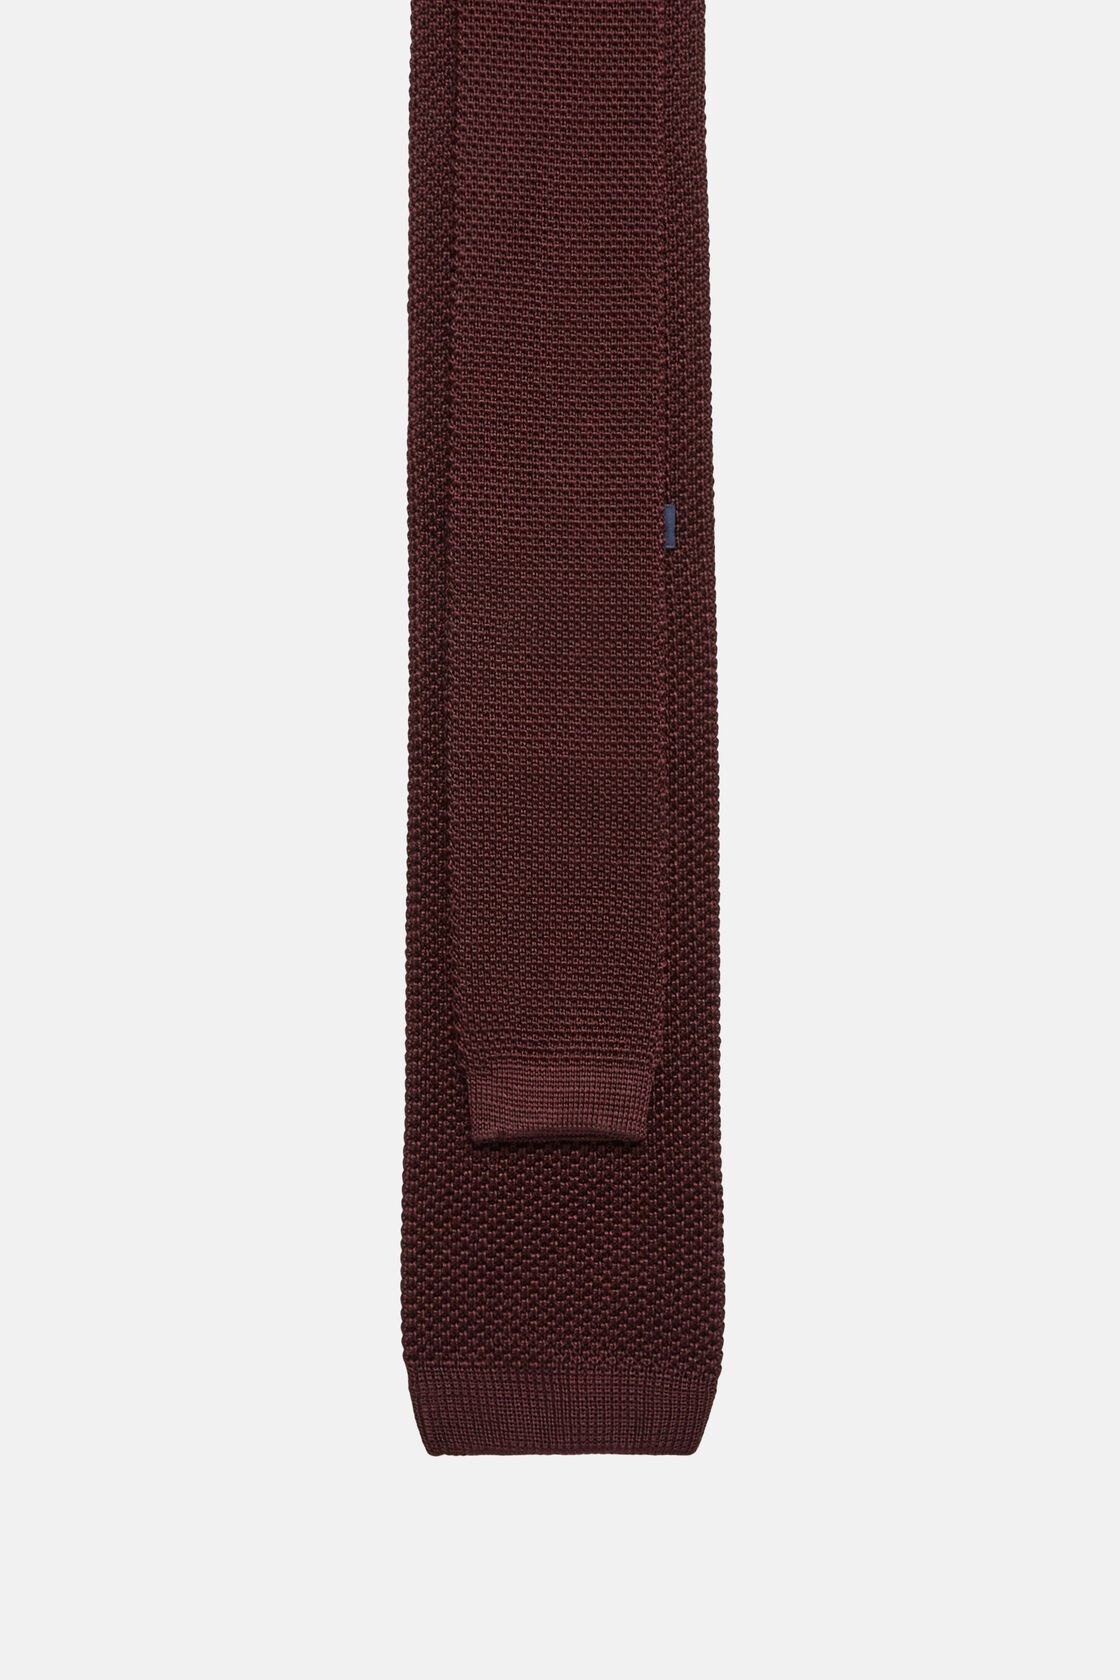 Knitted Tie, Burgundy, hi-res